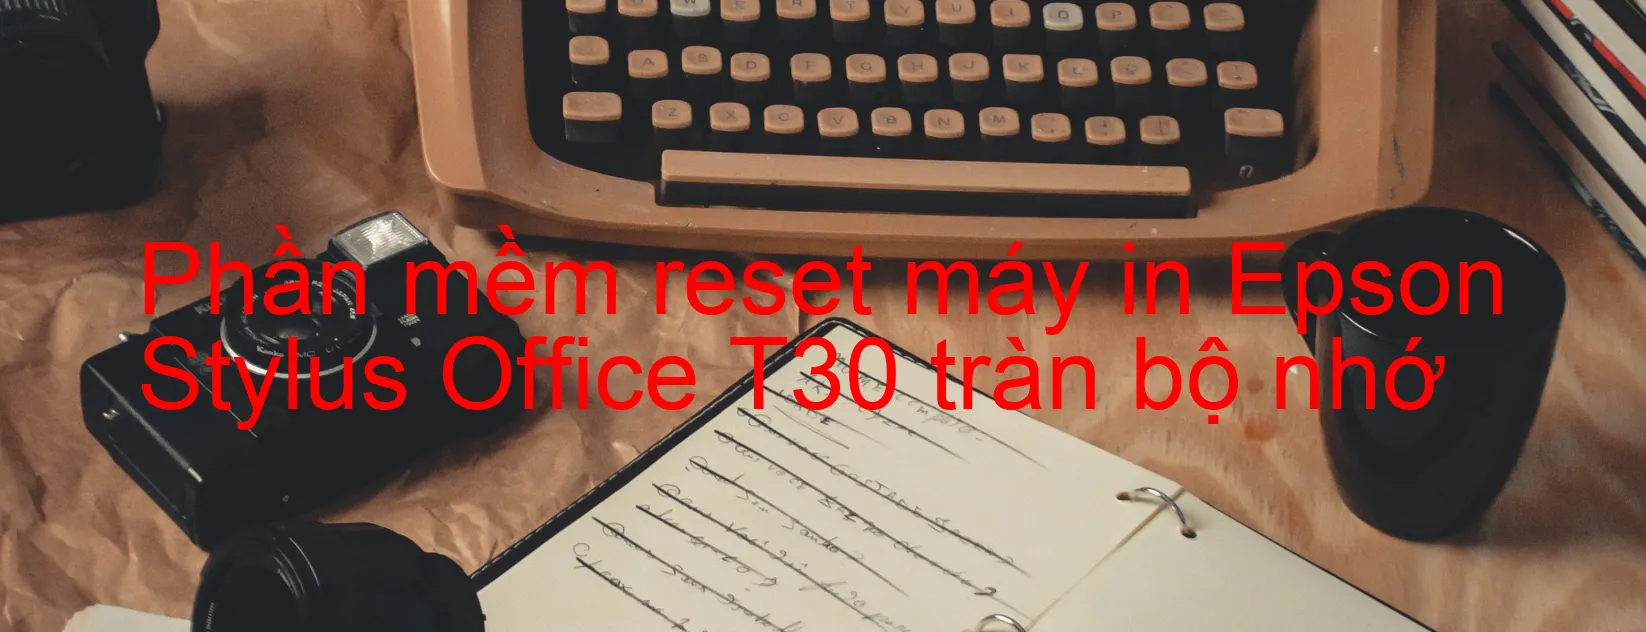 phan-mem-reset-may-in-epson-stylus-office-t30-tran-bo-nho.webp